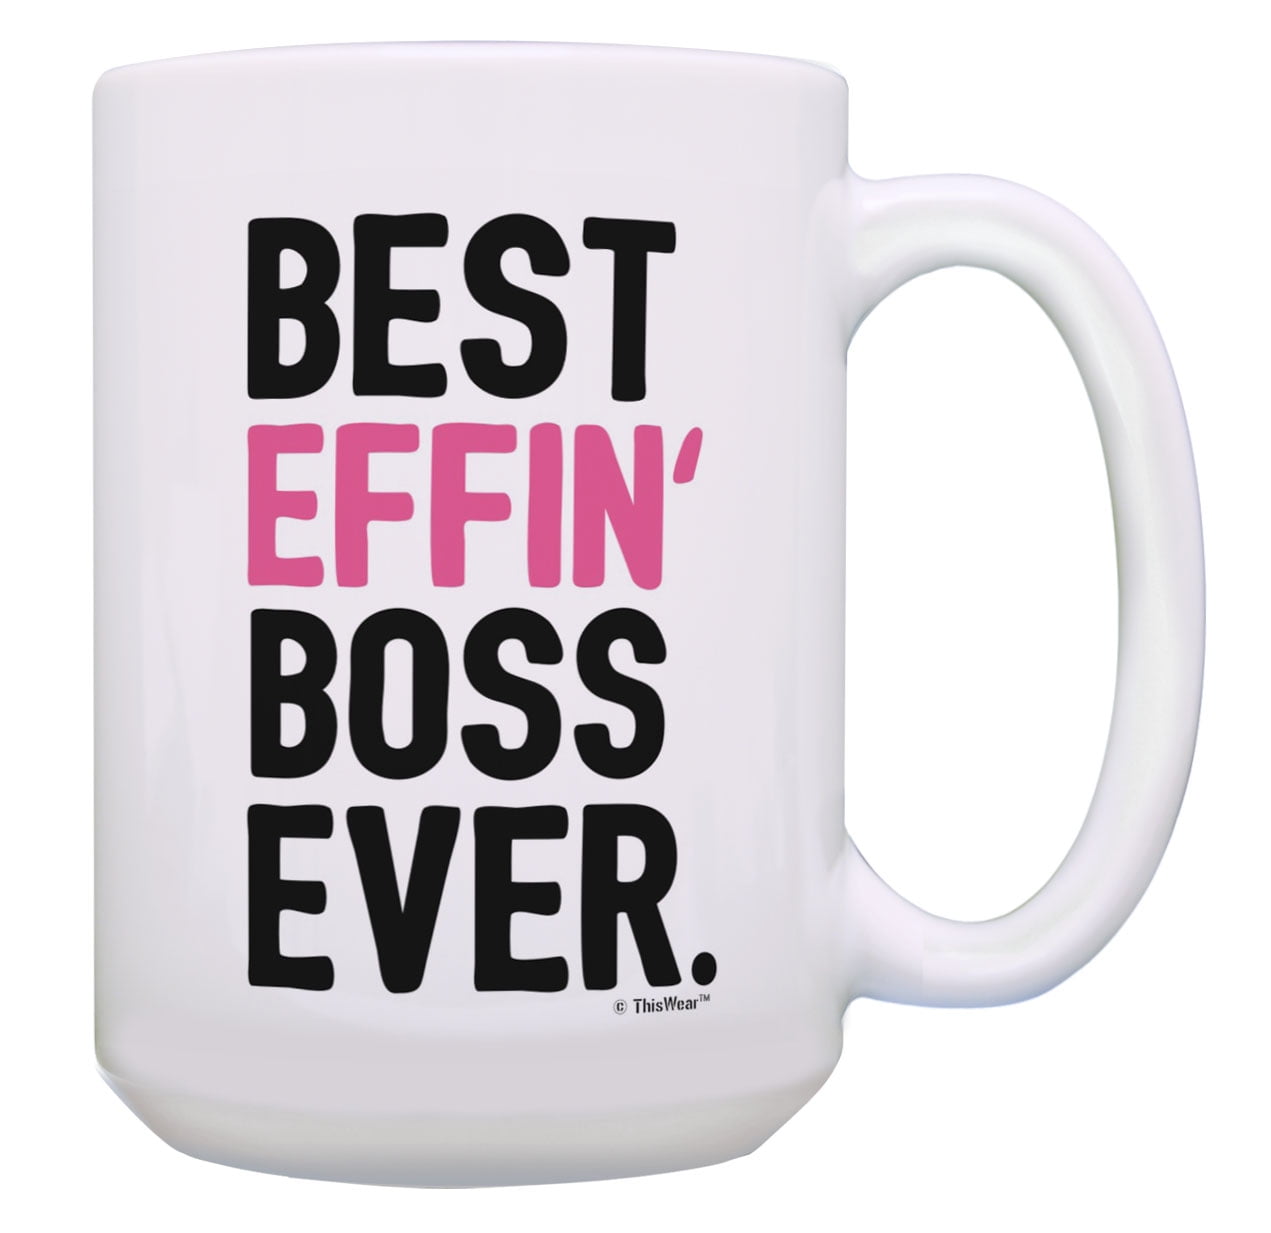 ThisWear Boss Coffee Mug Boss Nutritional Facts Mug Boss Cup Manger Mug  Supervisor Coffee Mug